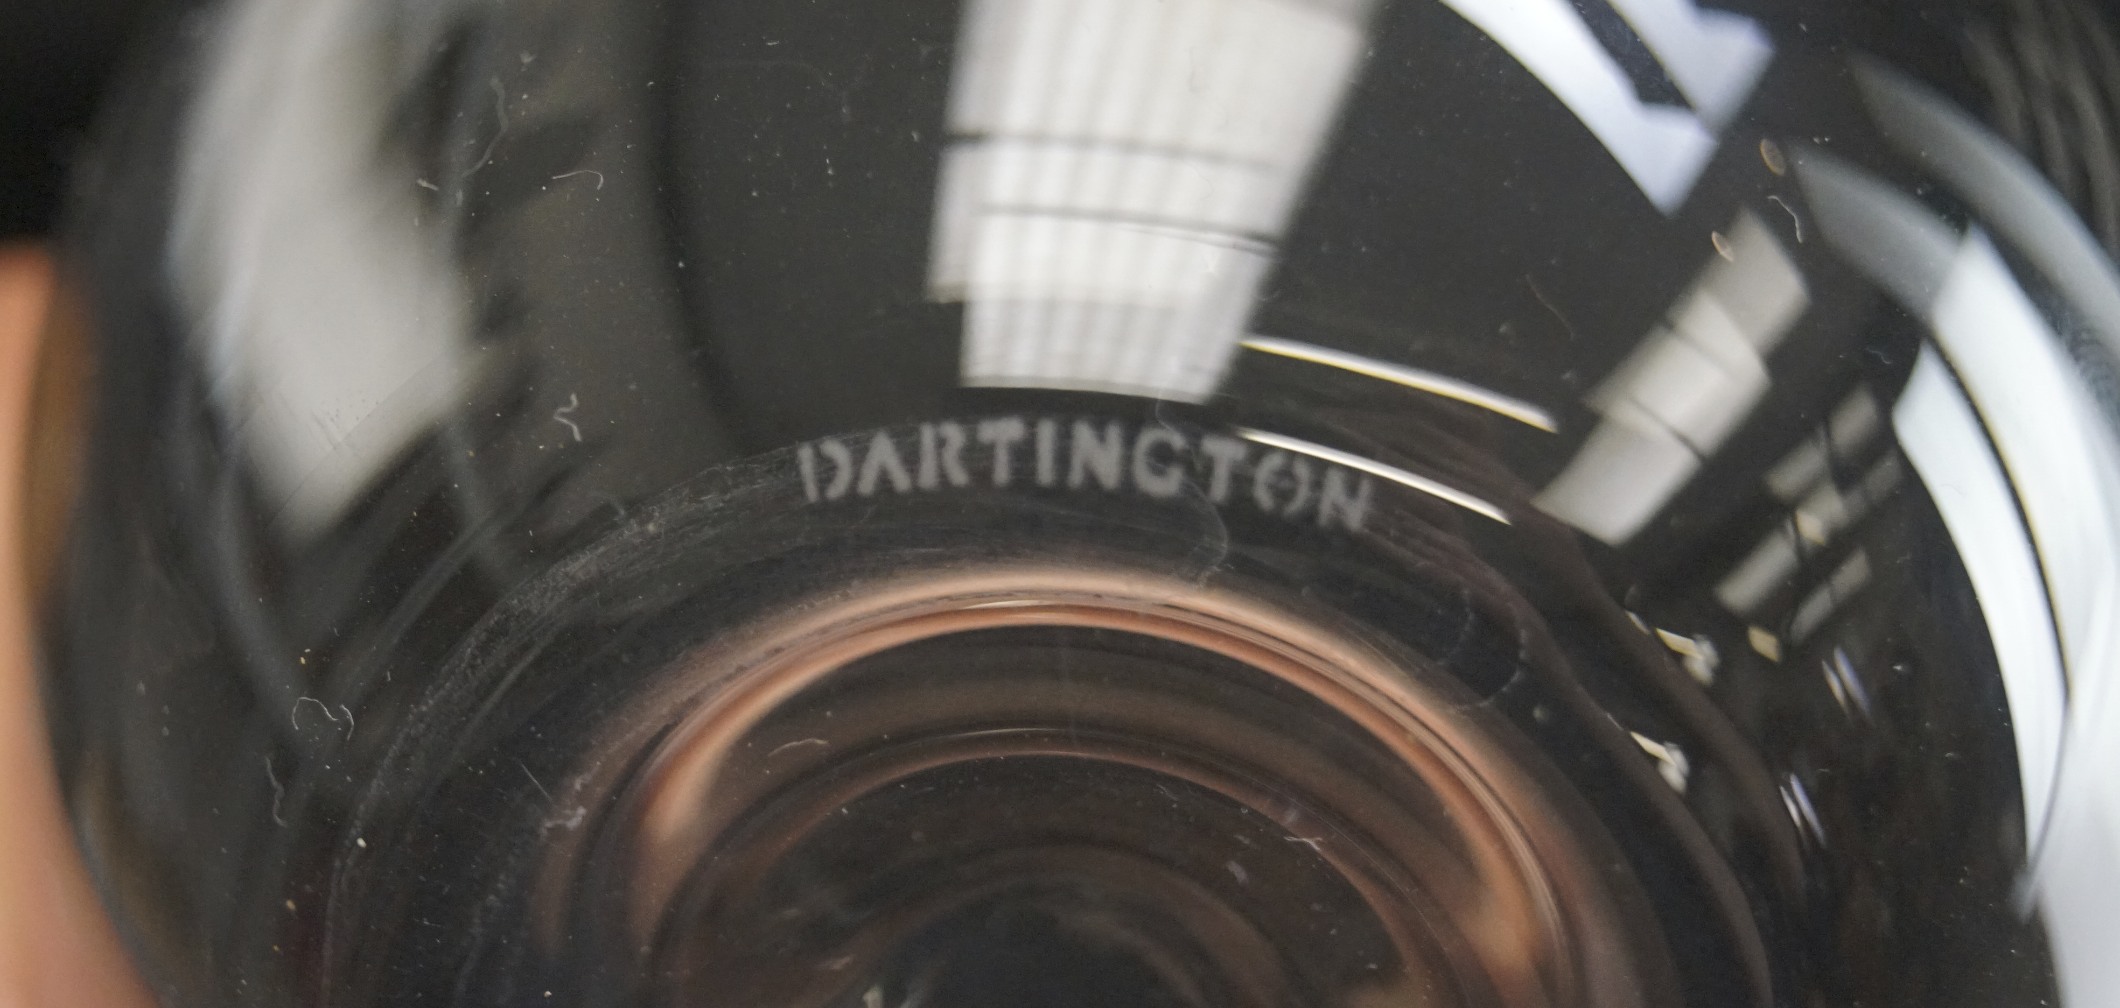 A selection of twelve Dartington crystal glass stemless wine glasses, - Image 2 of 3